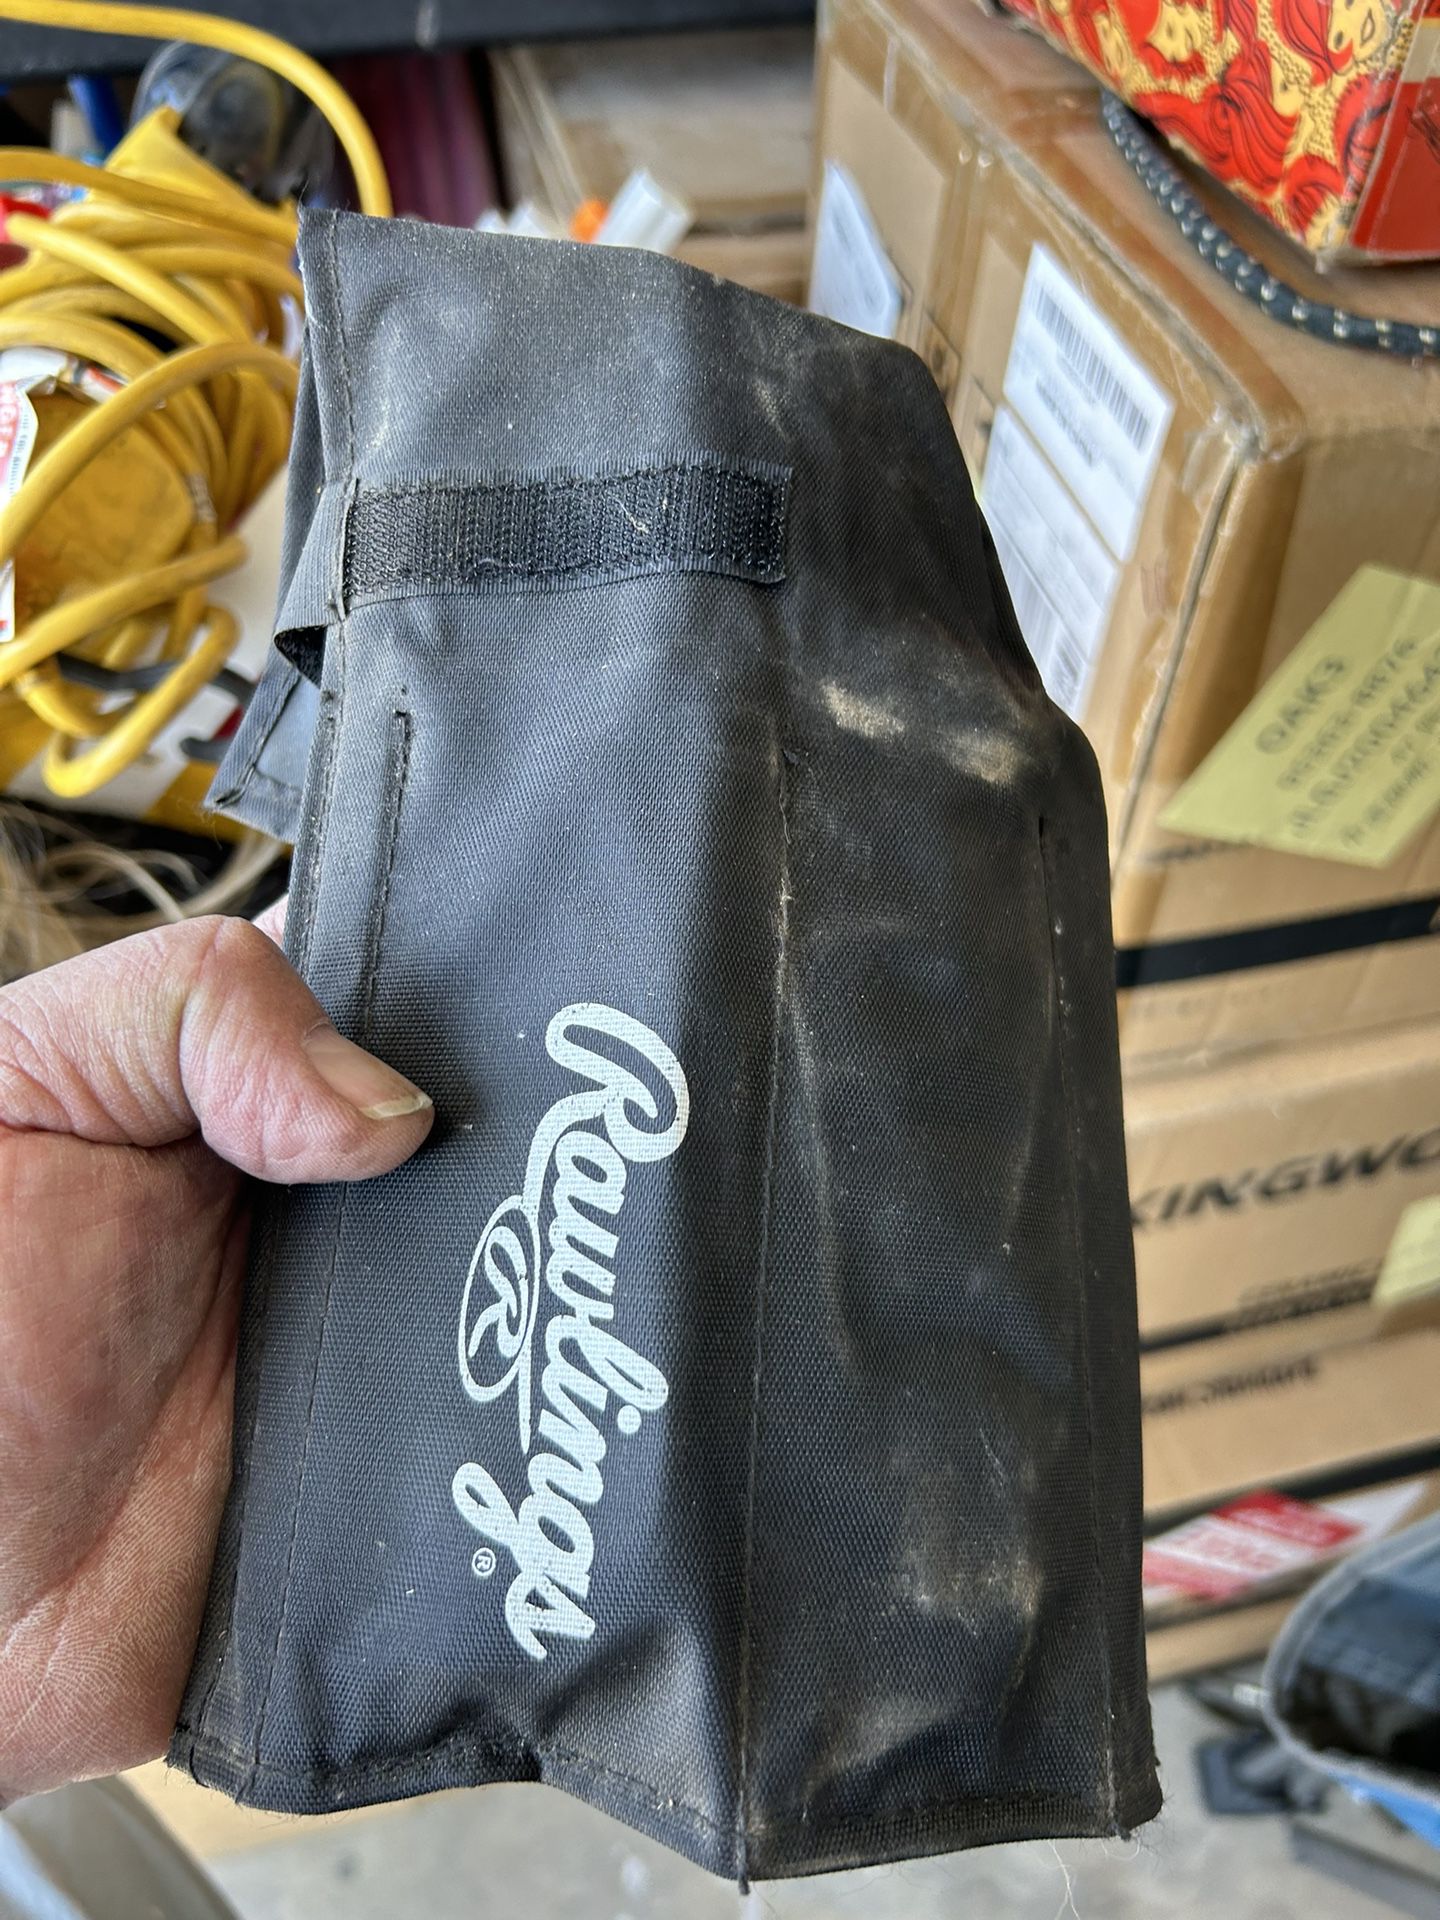 Rawlings Baseball Glove Repair Kit